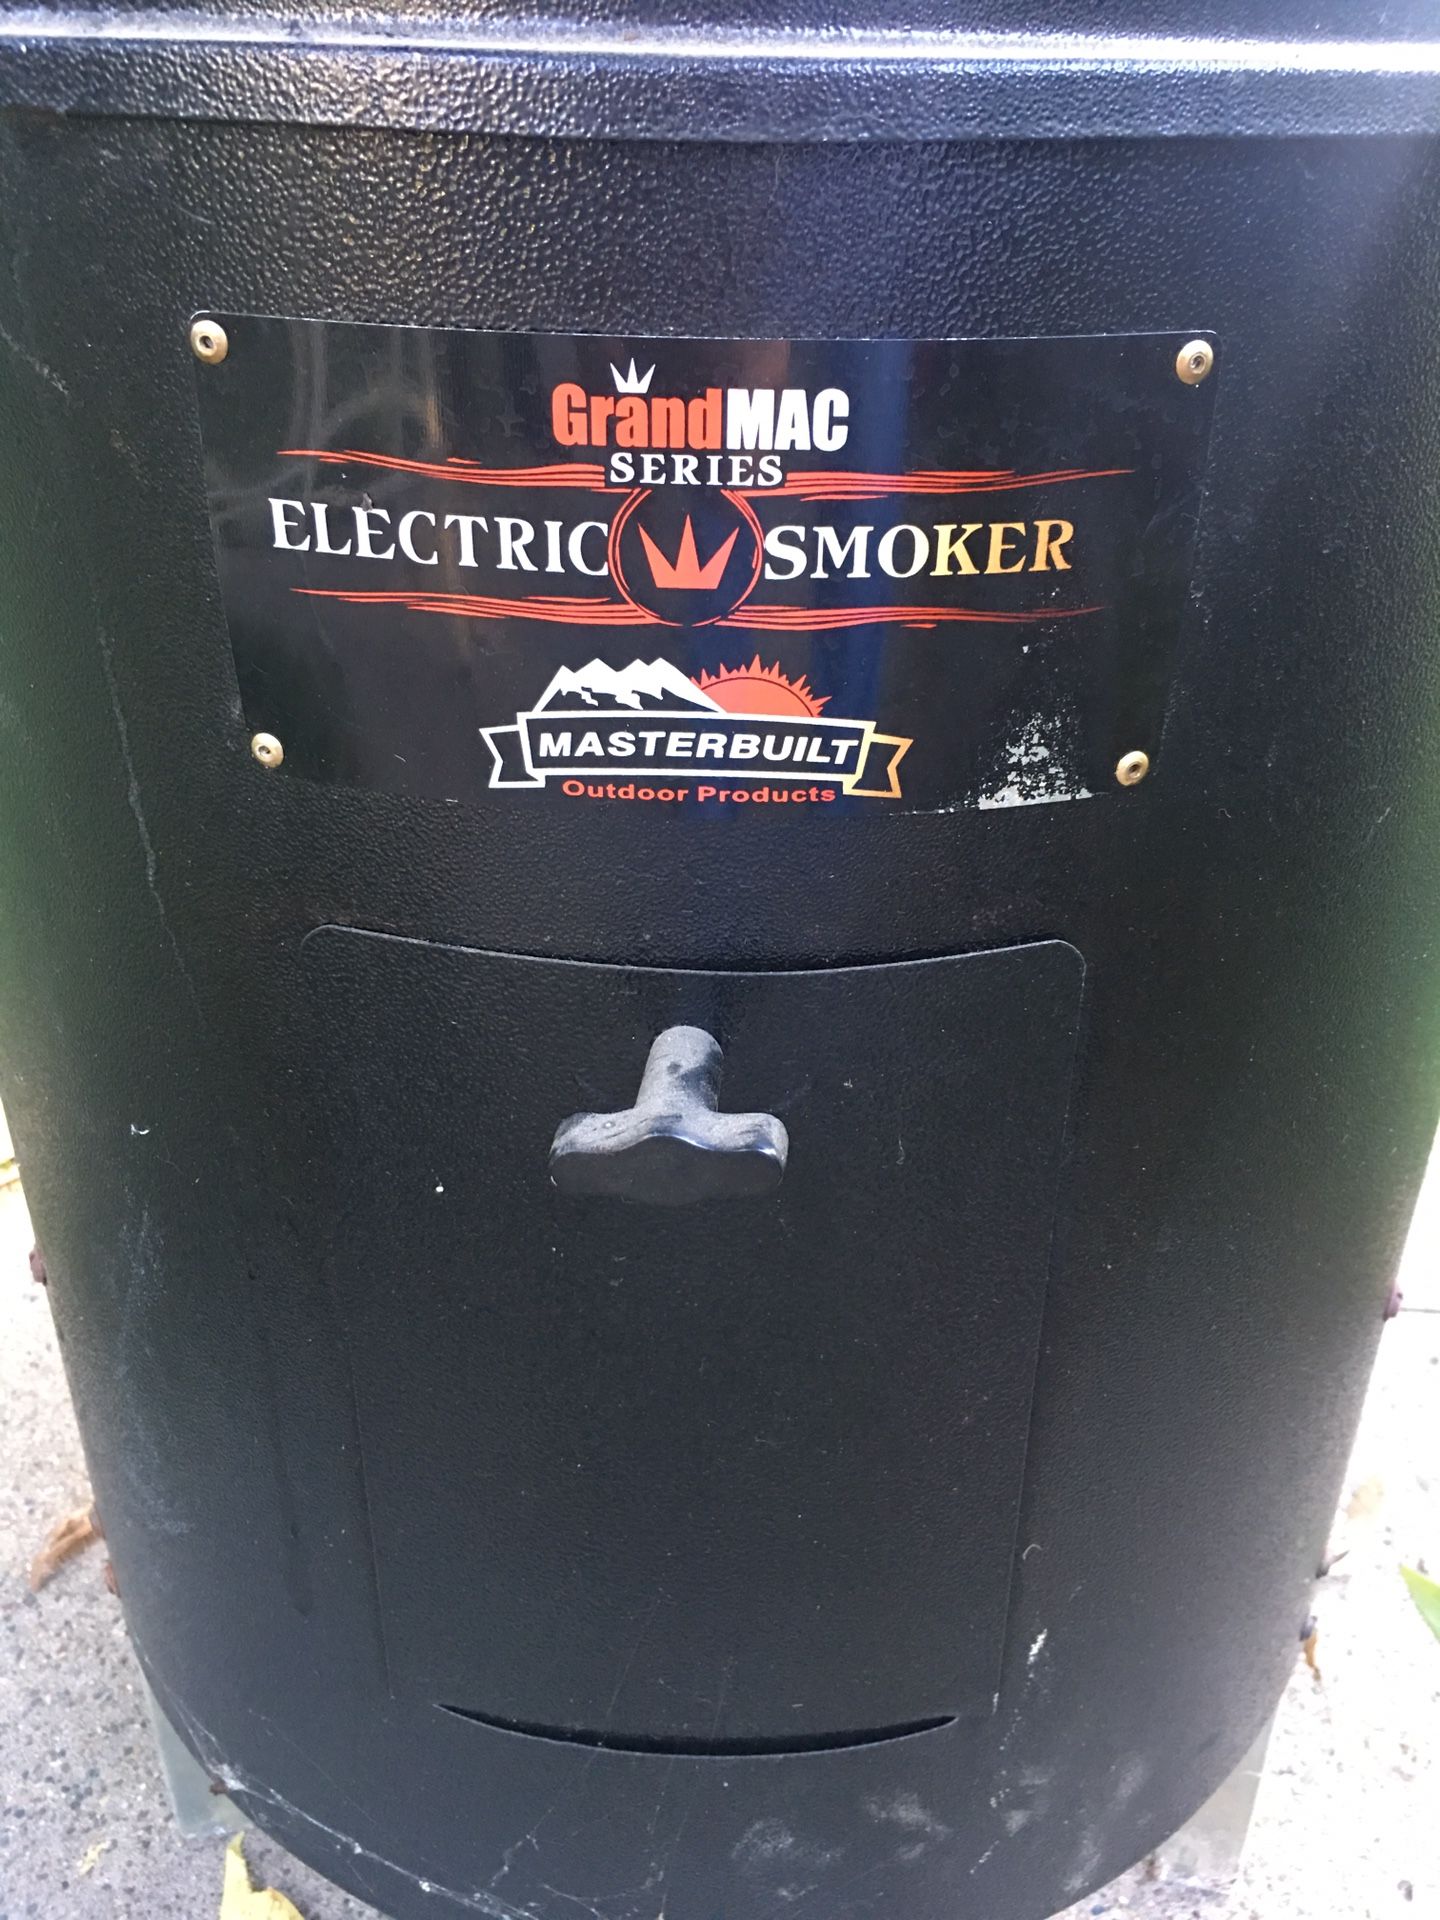 Electric smoker